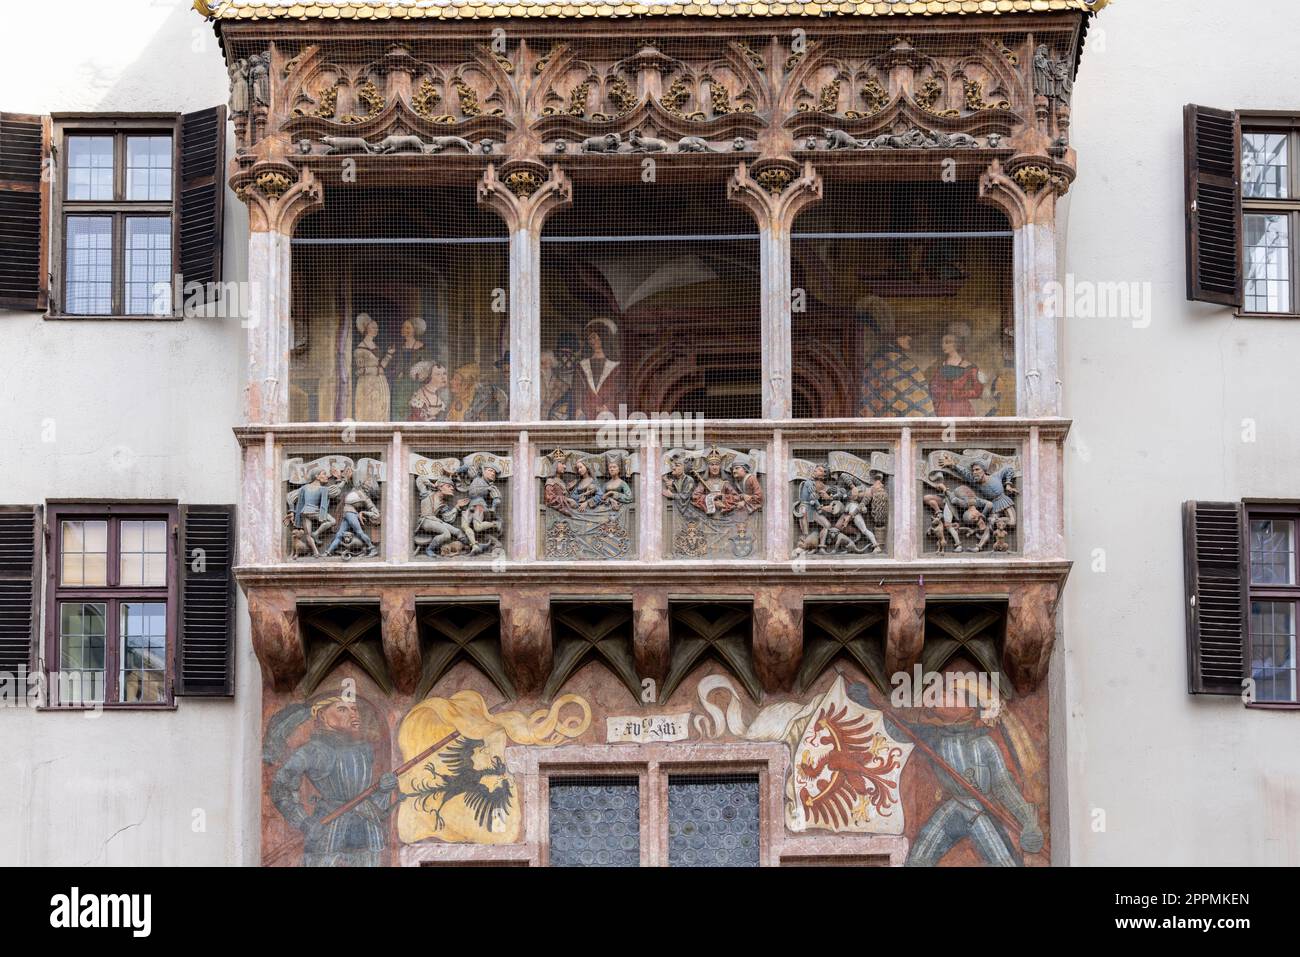 Goldenes Dachl ( Golden Roof), decorative balcony, Innsbruck  Austria Stock Photo